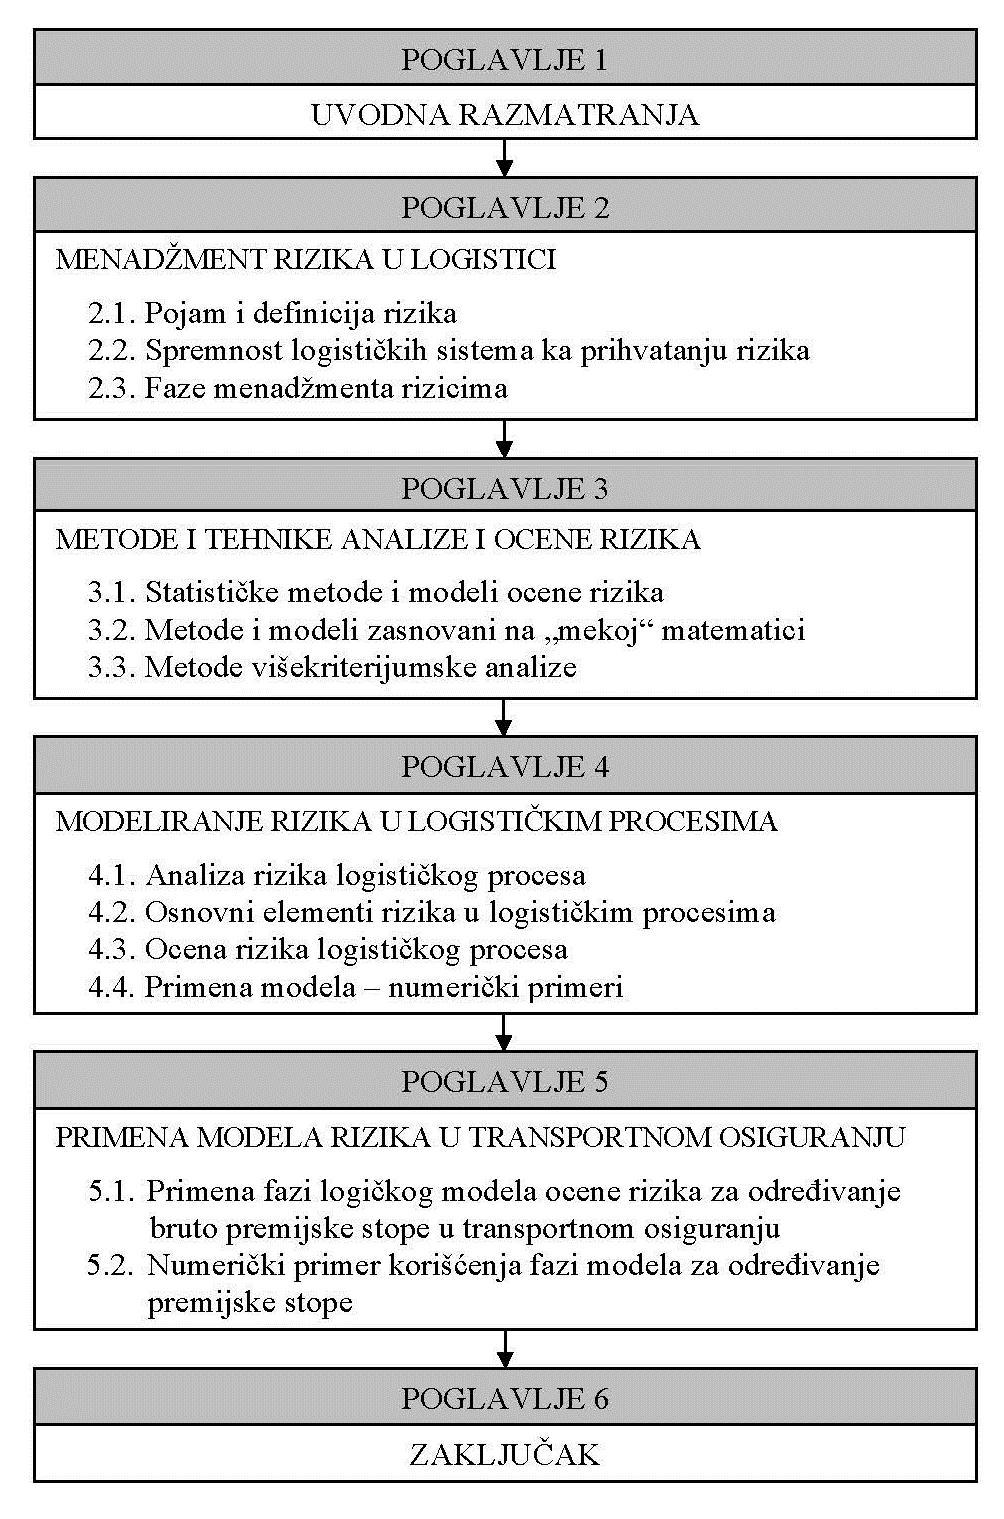 Uvod Metodologija rada je prikazana na slici 1.1: Slika 1.1. Metodologija rada U 1. poglavlju data su uvodna razmatranja.